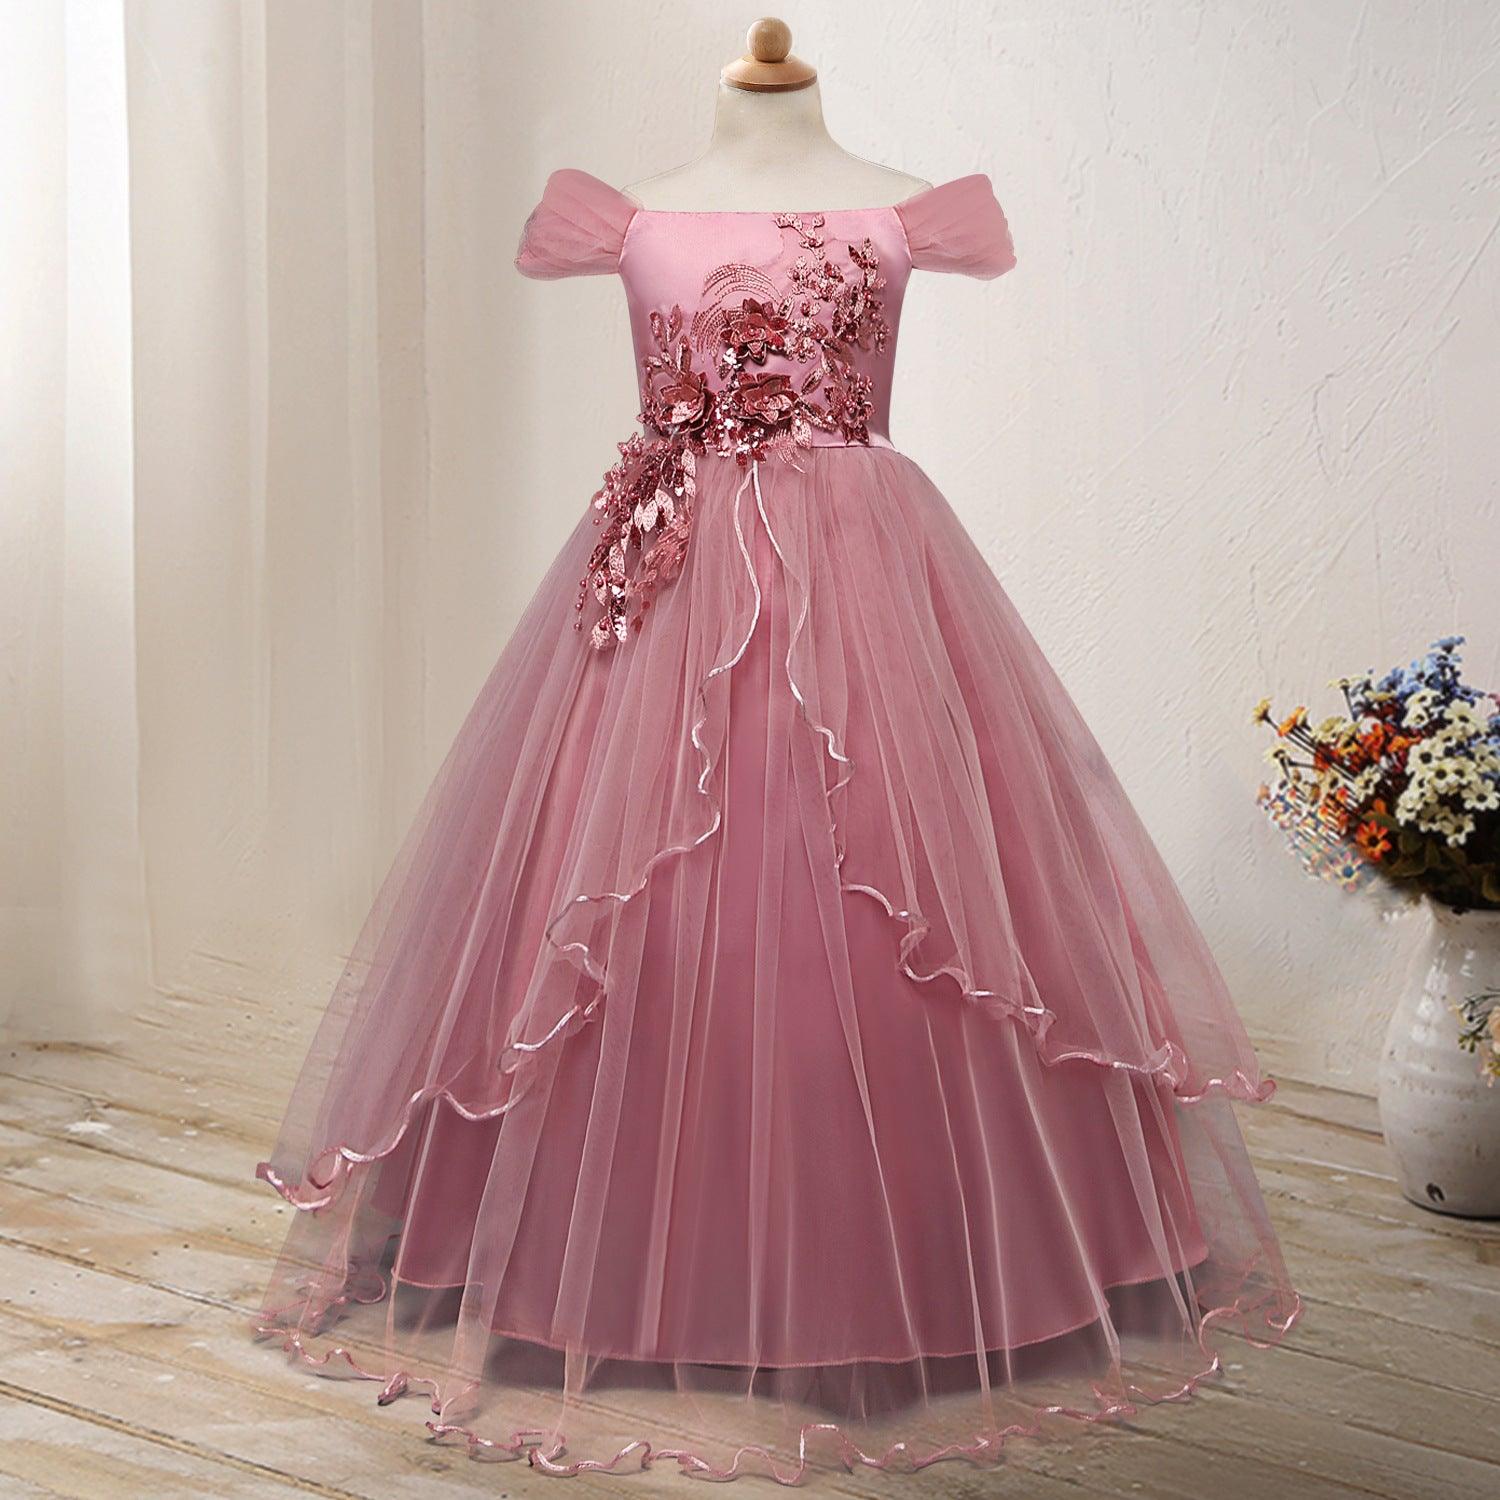 One-shoulder Princess Flower Dress Costume - TOYCENT 